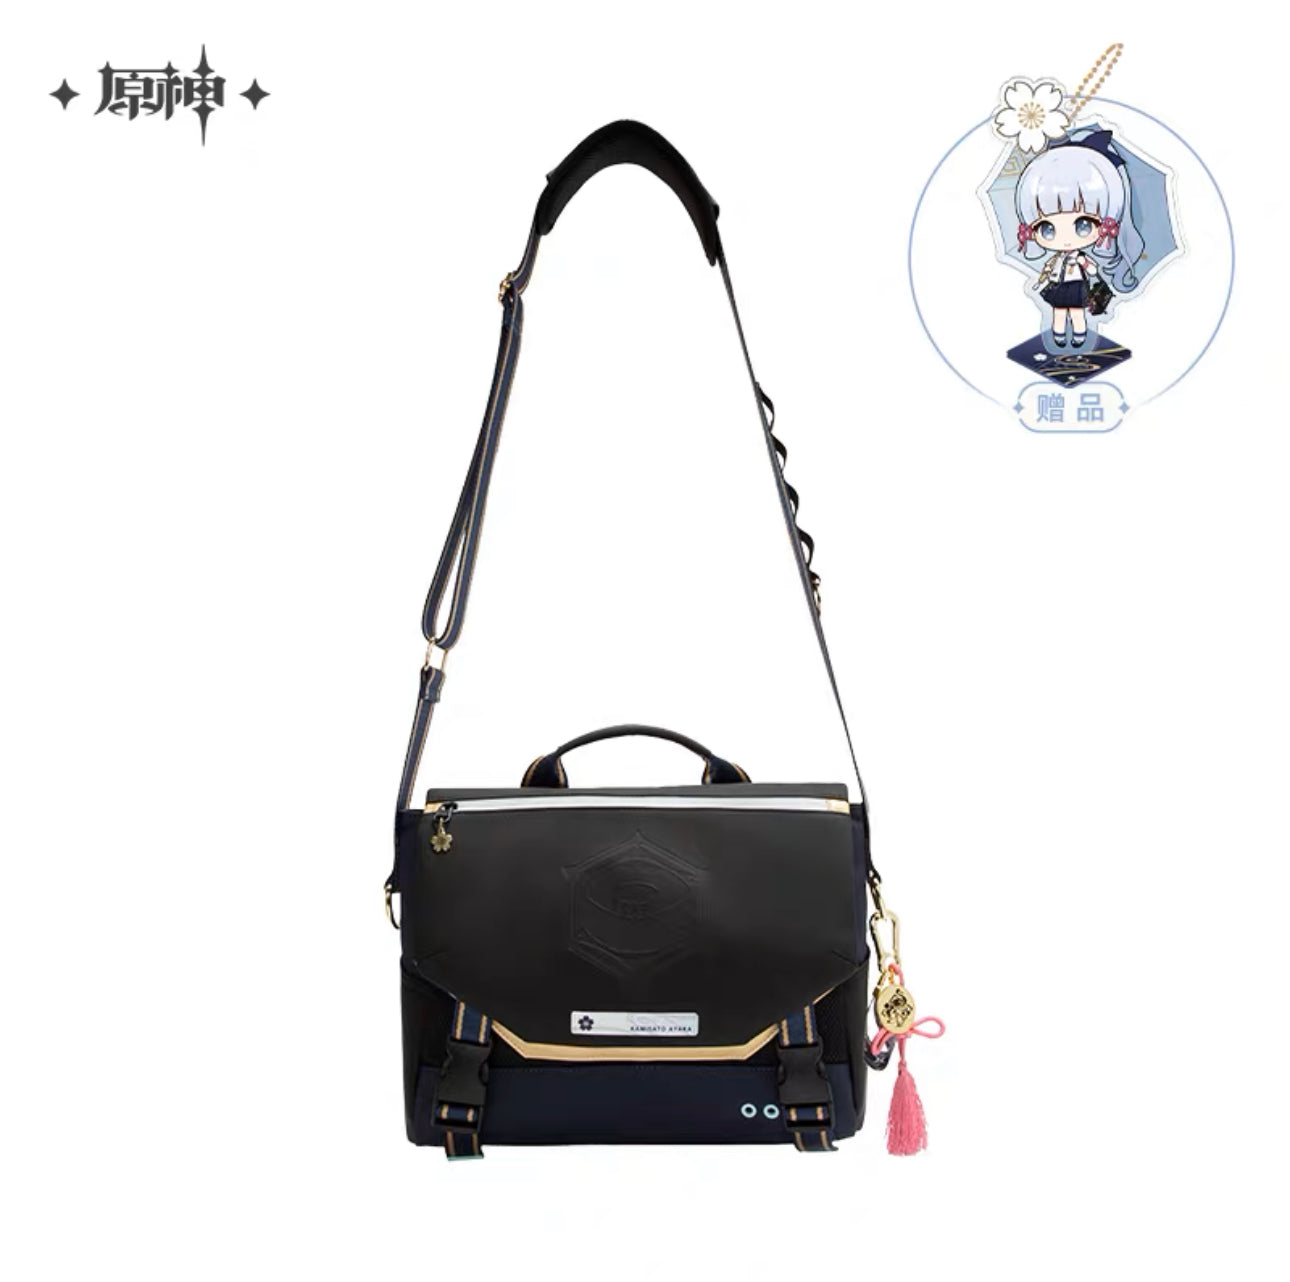 [OFFICIAL MERCHANDISE] Ayaka Theme Impressions Shoulder Bag